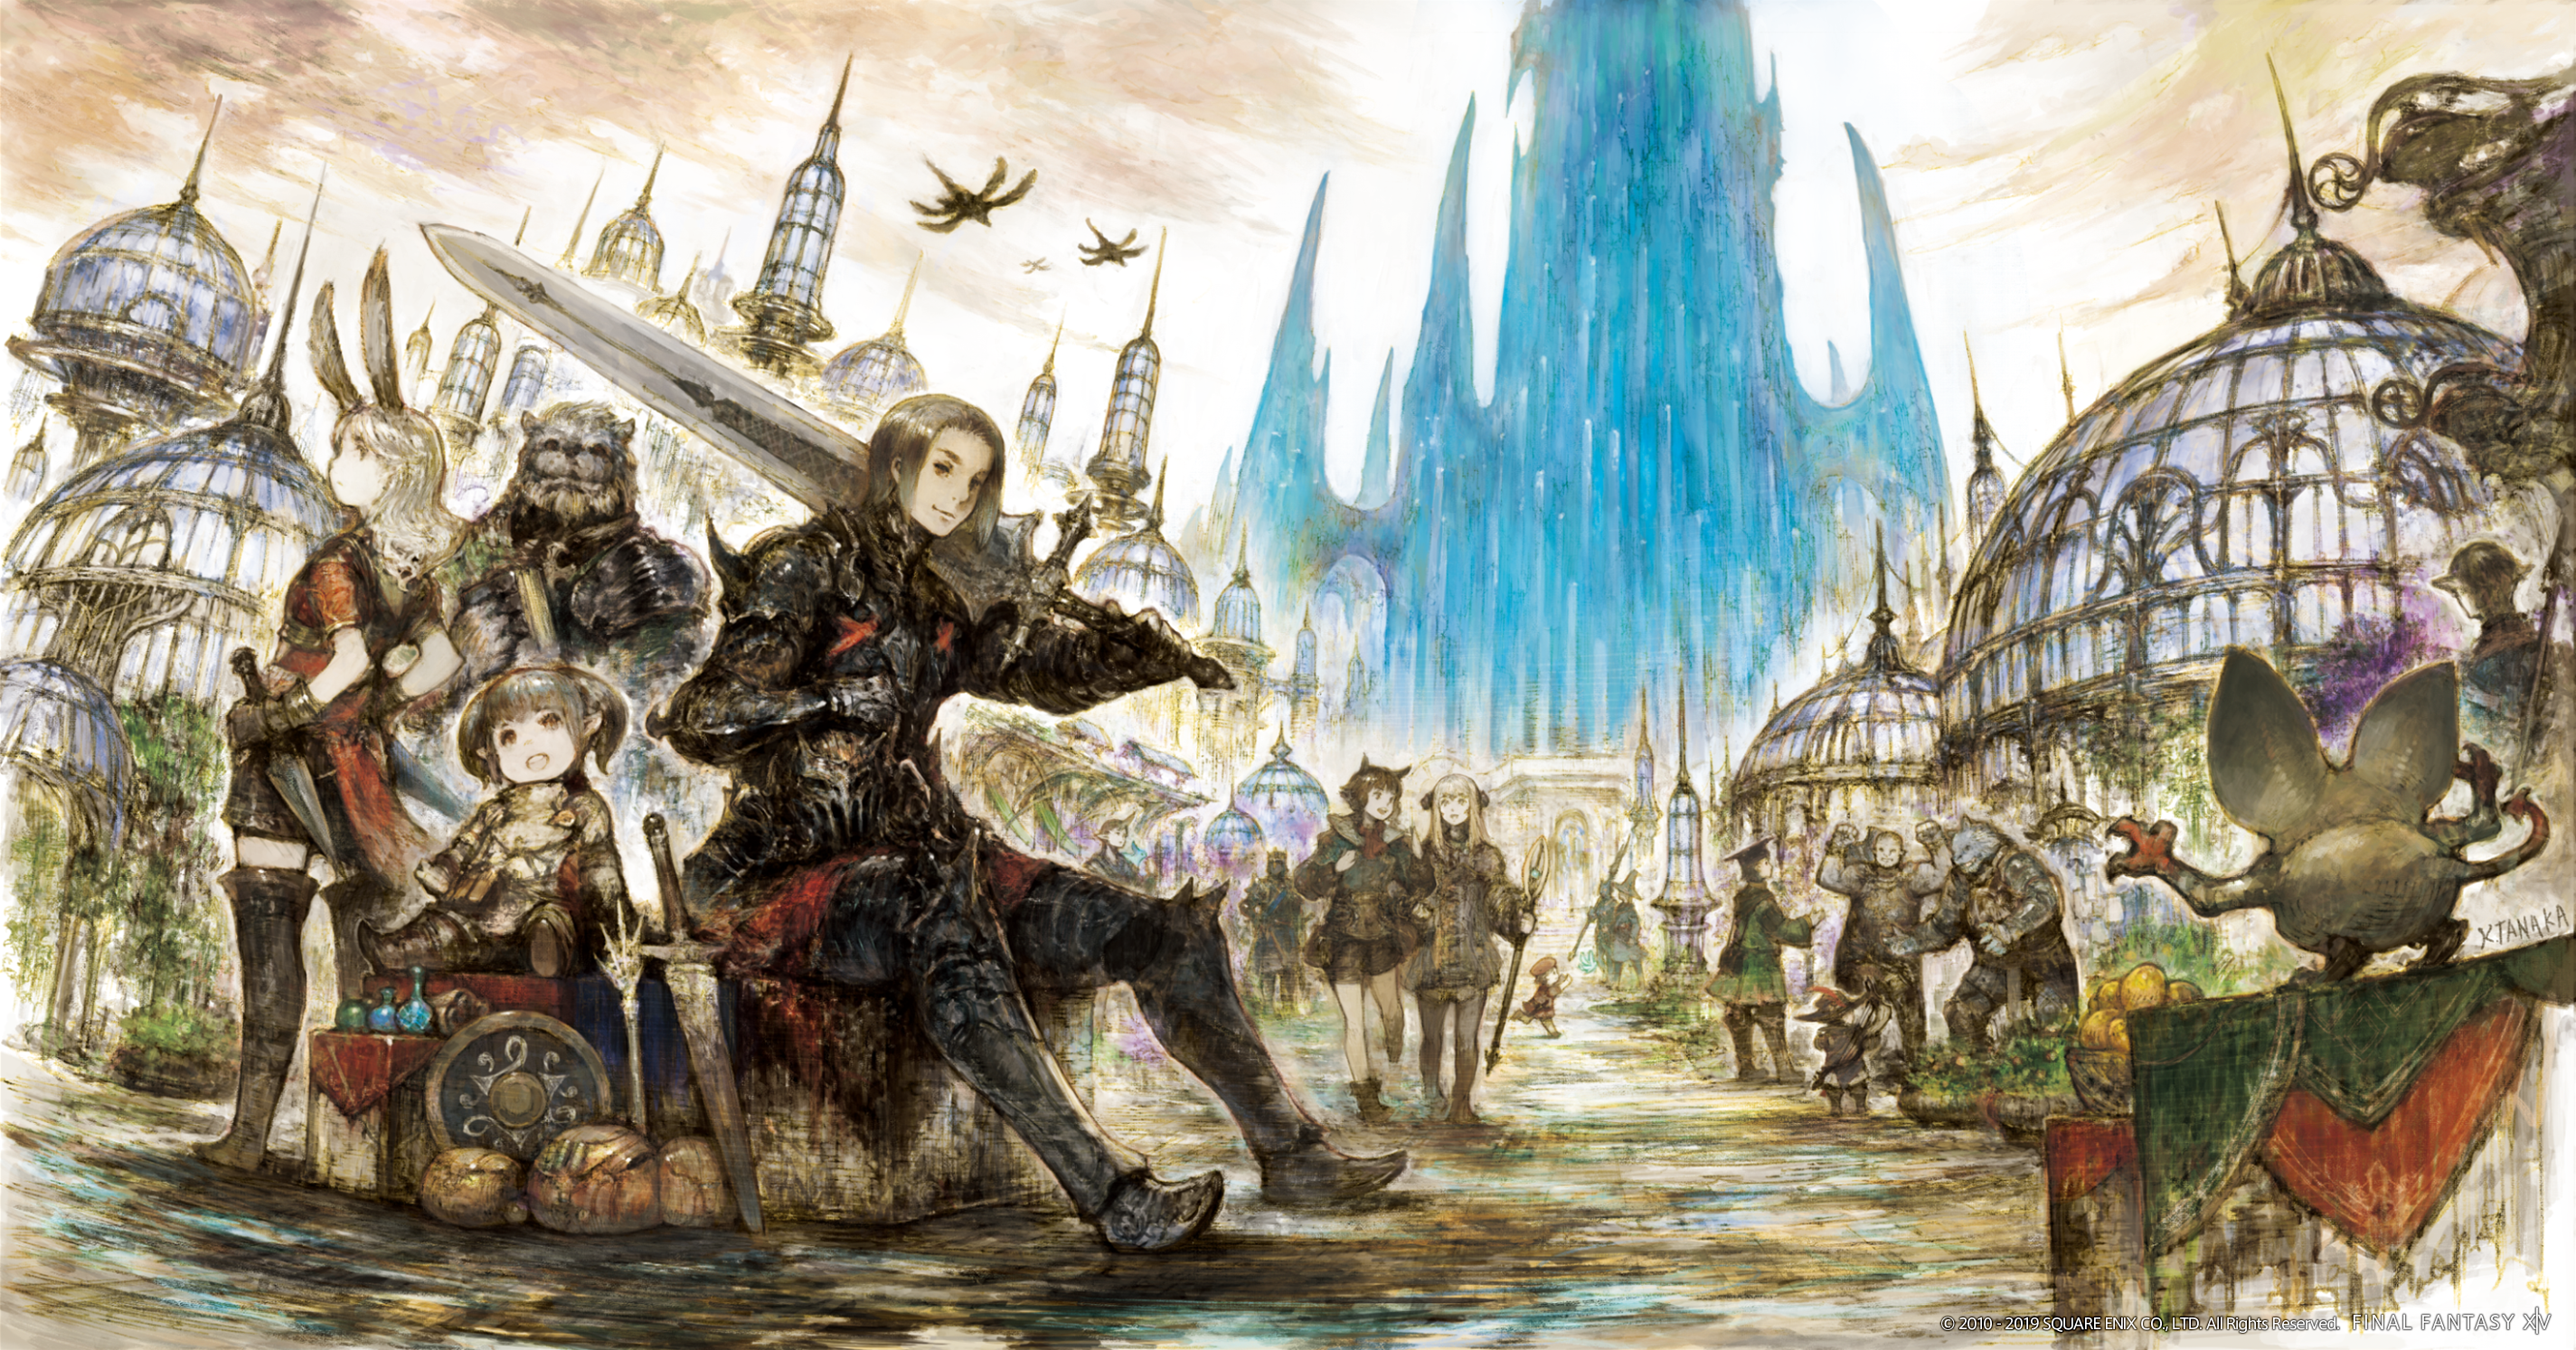 Final Fantasy XIV: Shadowbringers Wallpapers - Wallpaper Cave